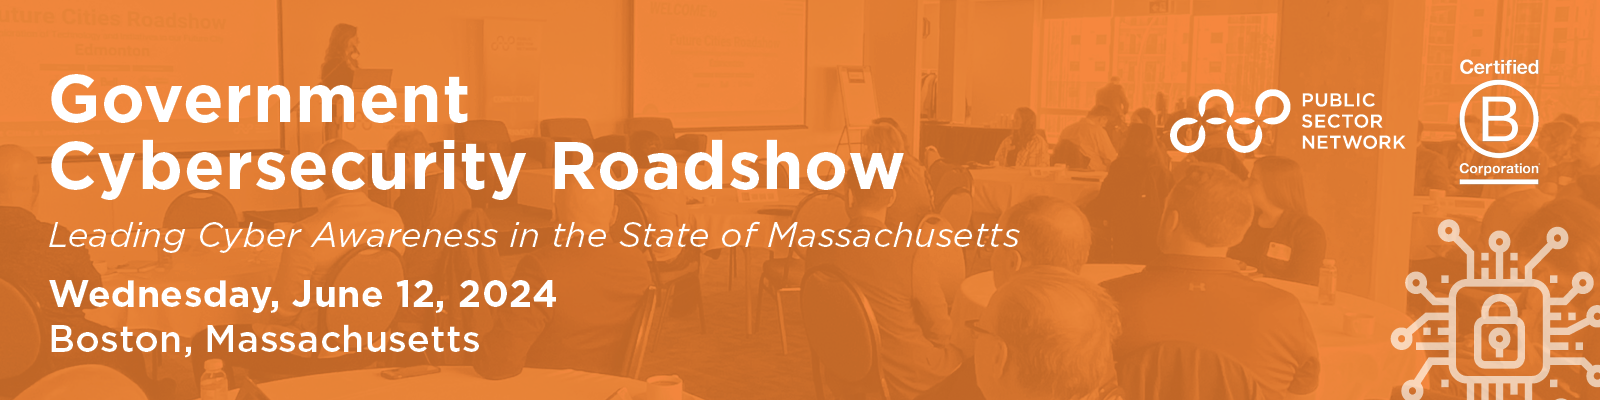 Government Cybersecurity Roadshow Massachusetts